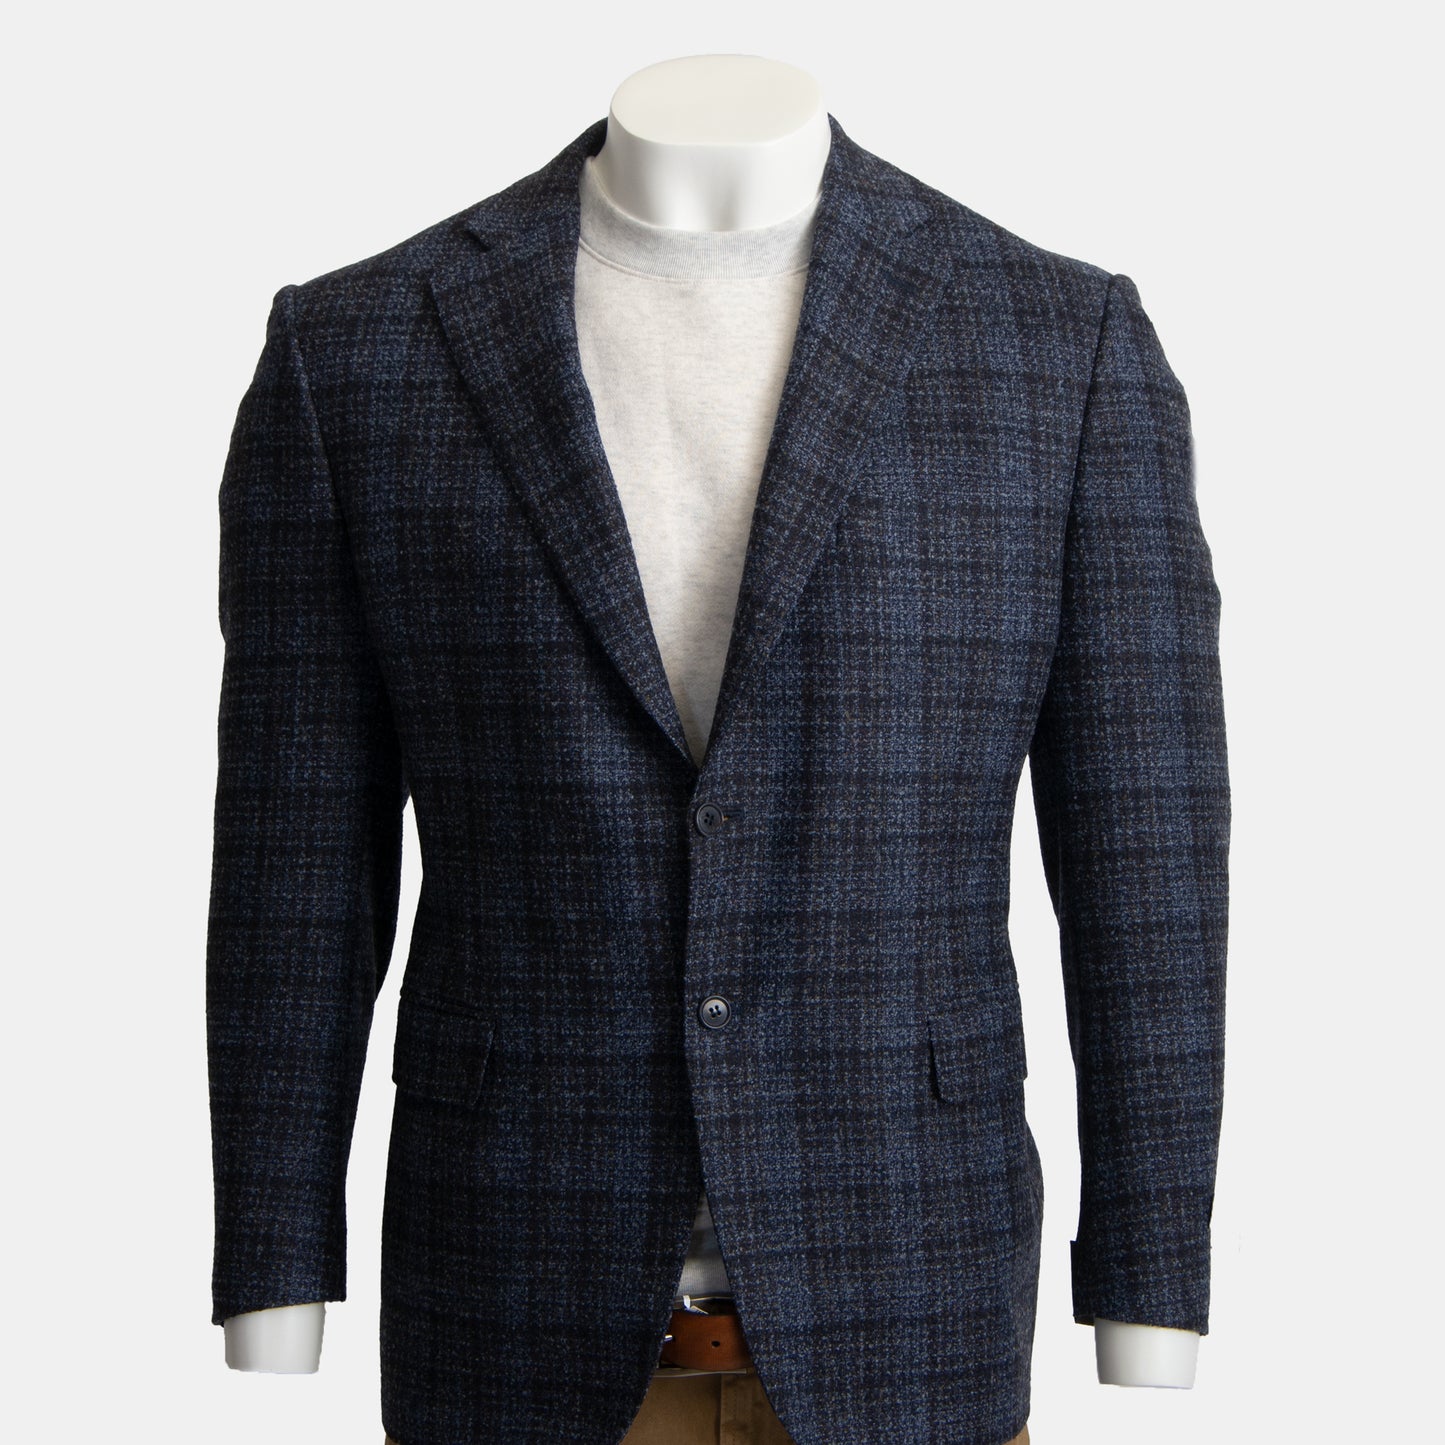 Khaki’s of Carmel - Blue Plaid Jacket